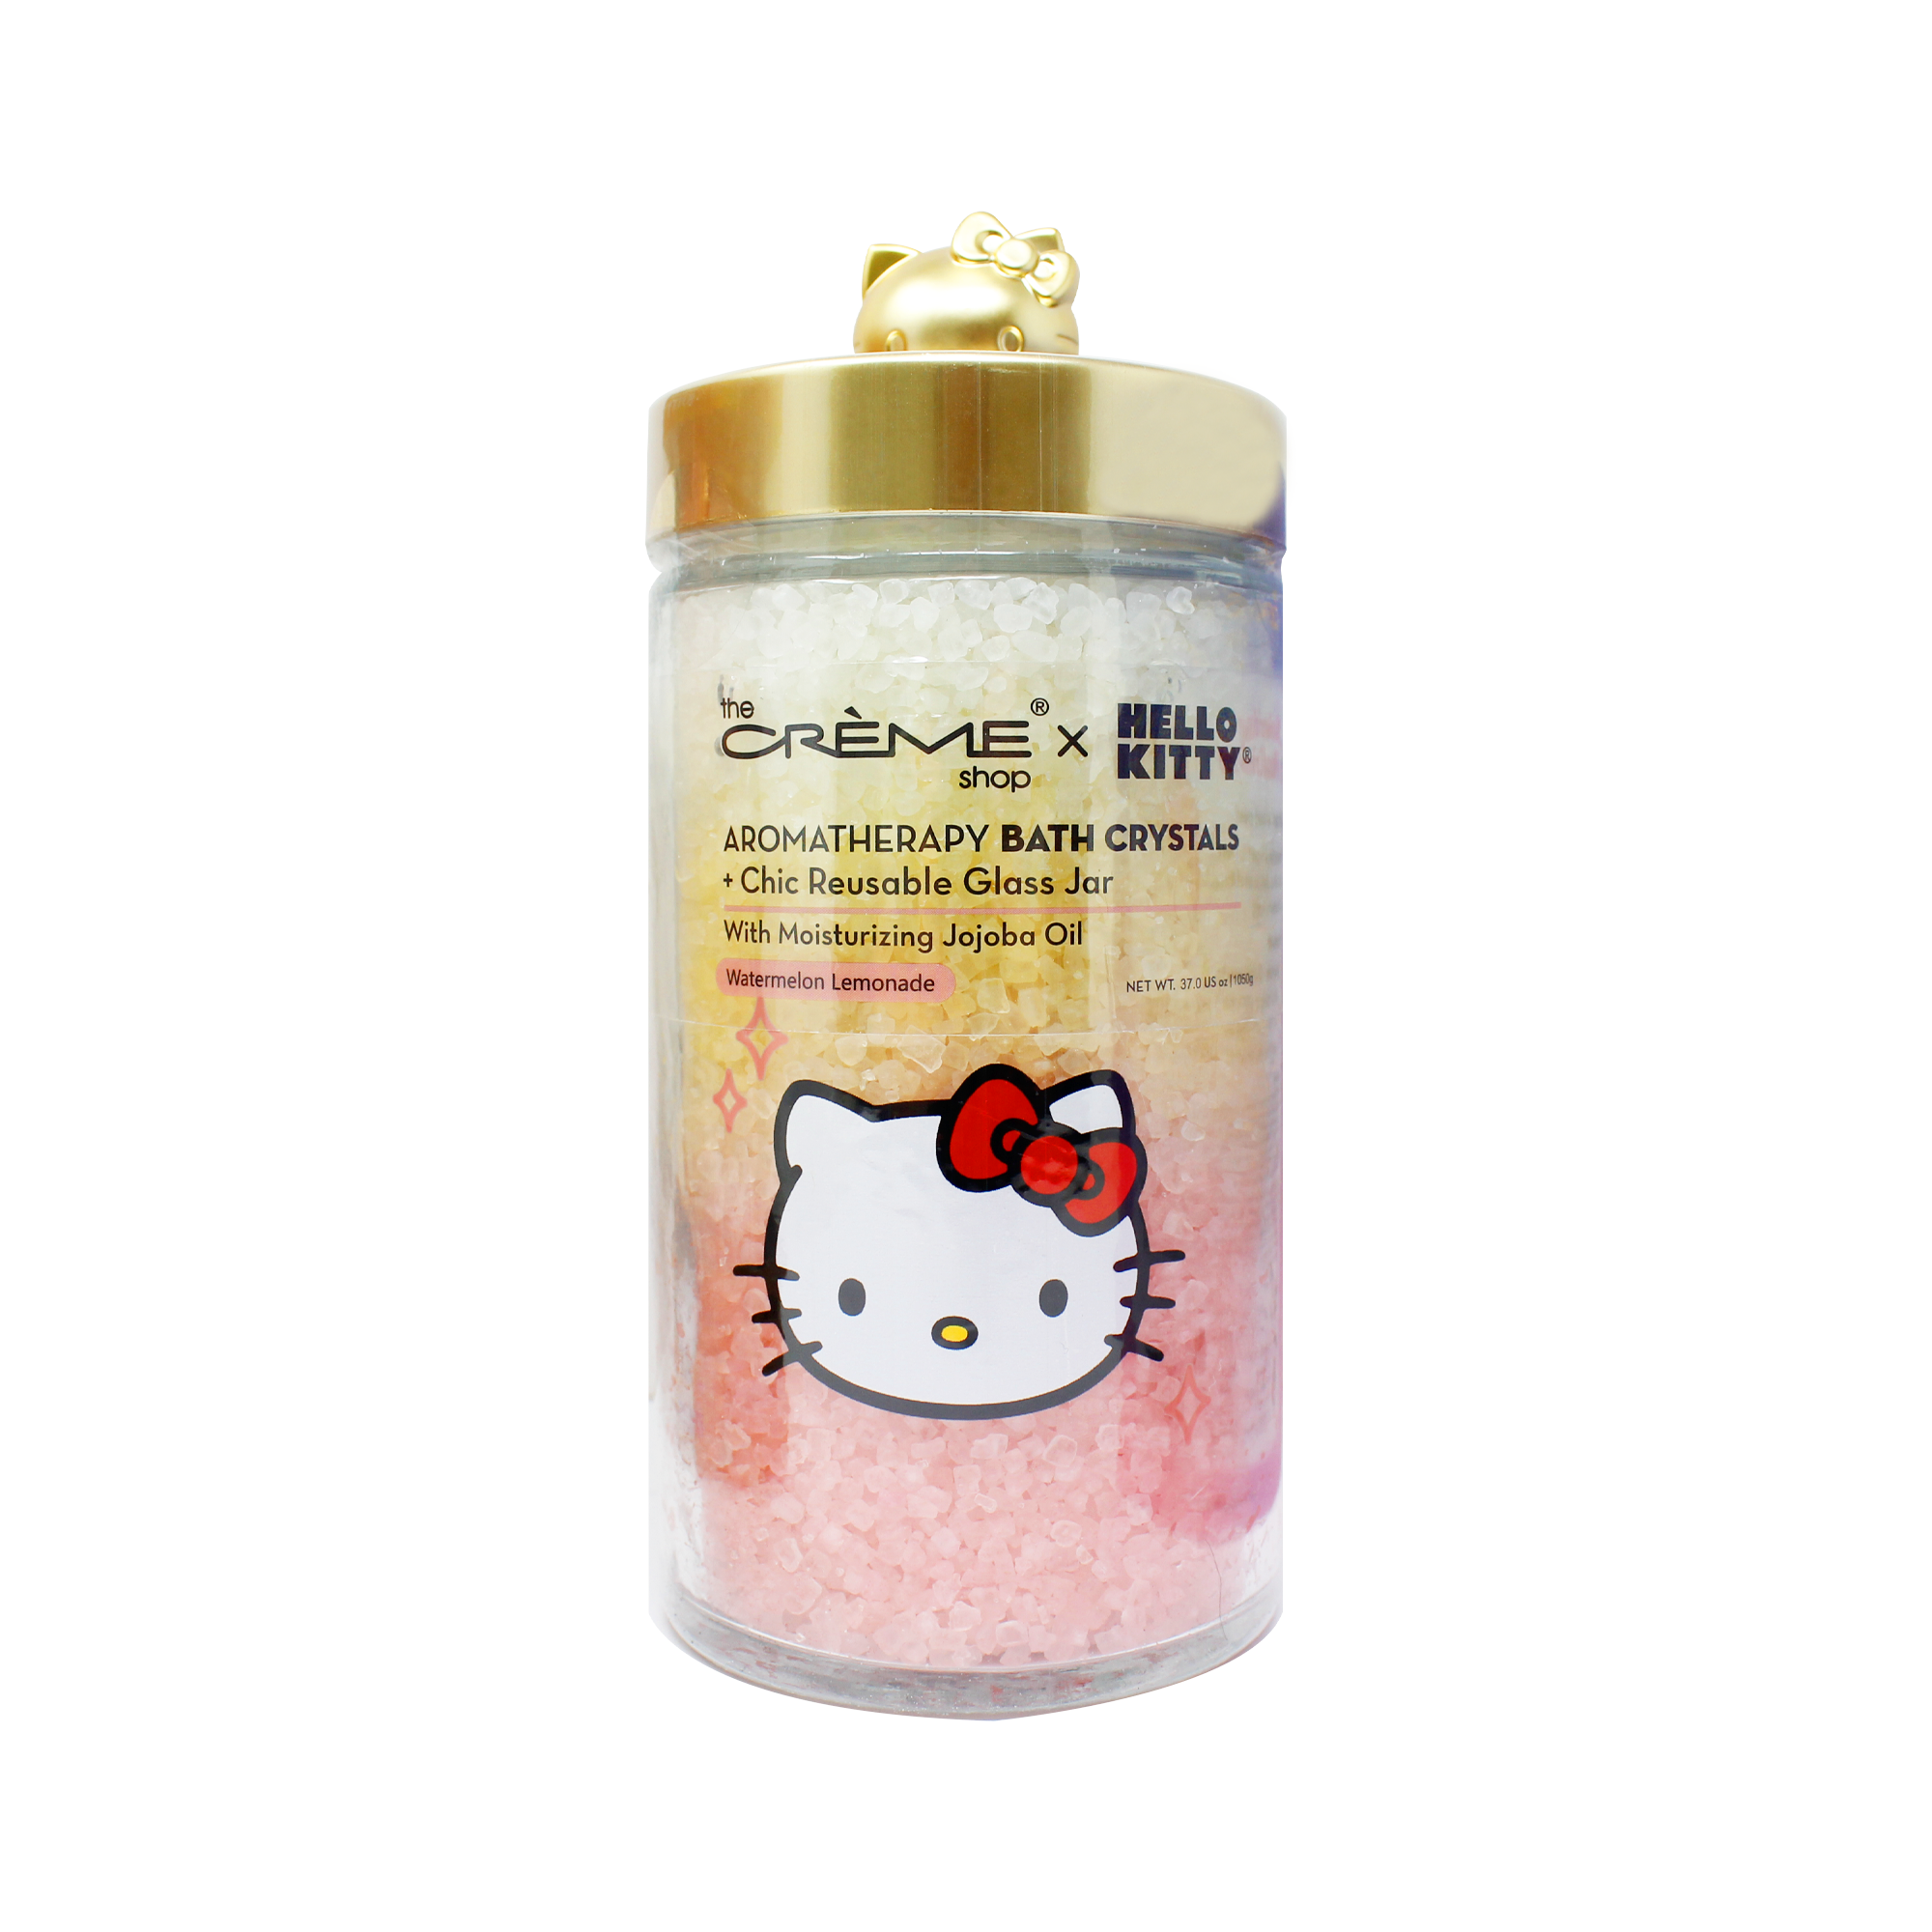 Hello Kitty x The Crème Shop Aromatherapy Bath Crystals (Watermelon Lemonade) Beauty The Crème Shop   